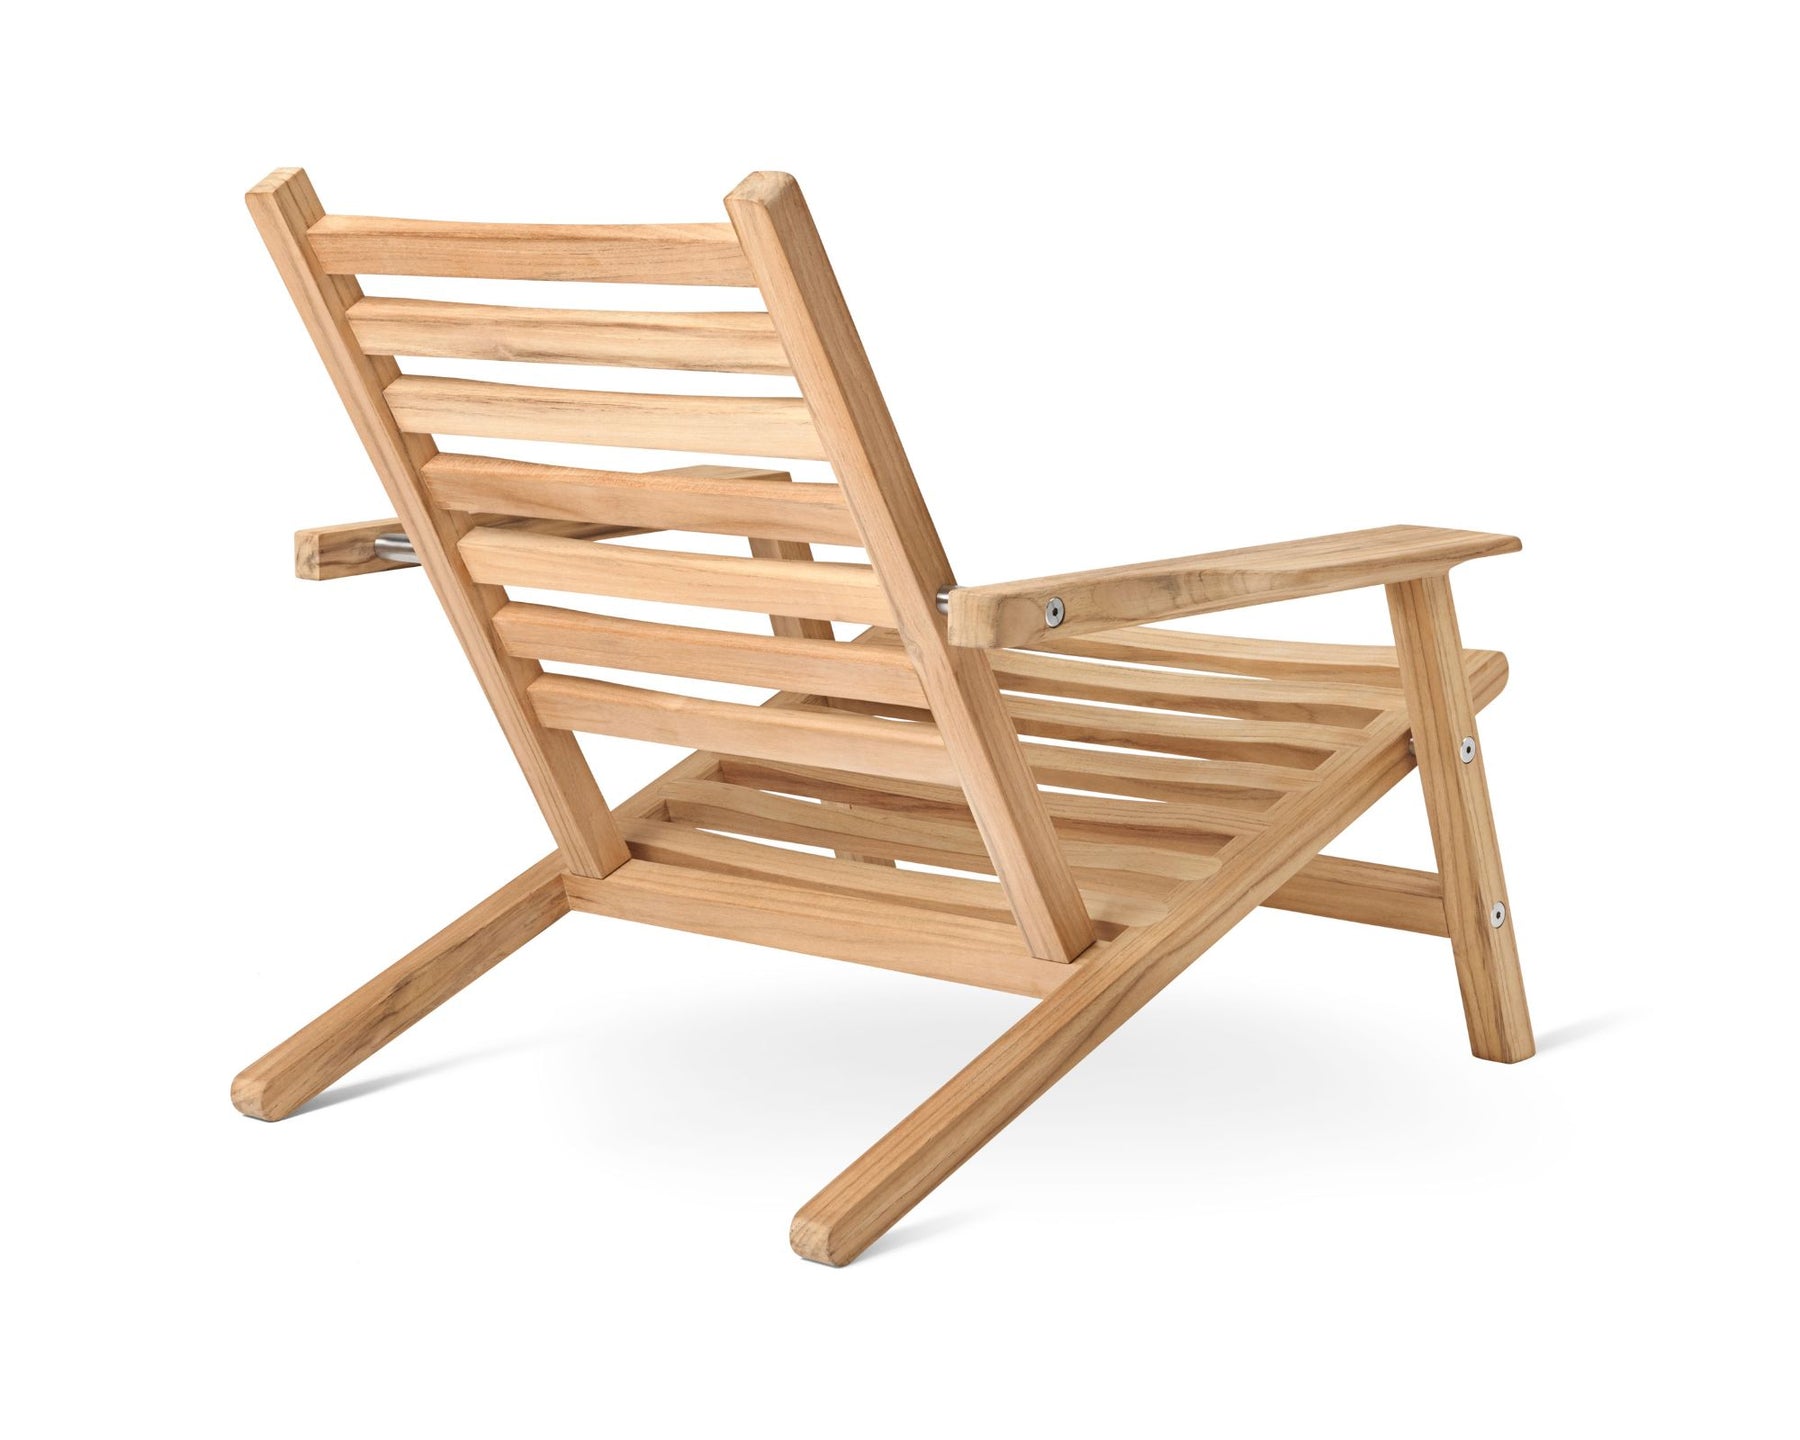 Outdoor Wood Furniture | DSHOP